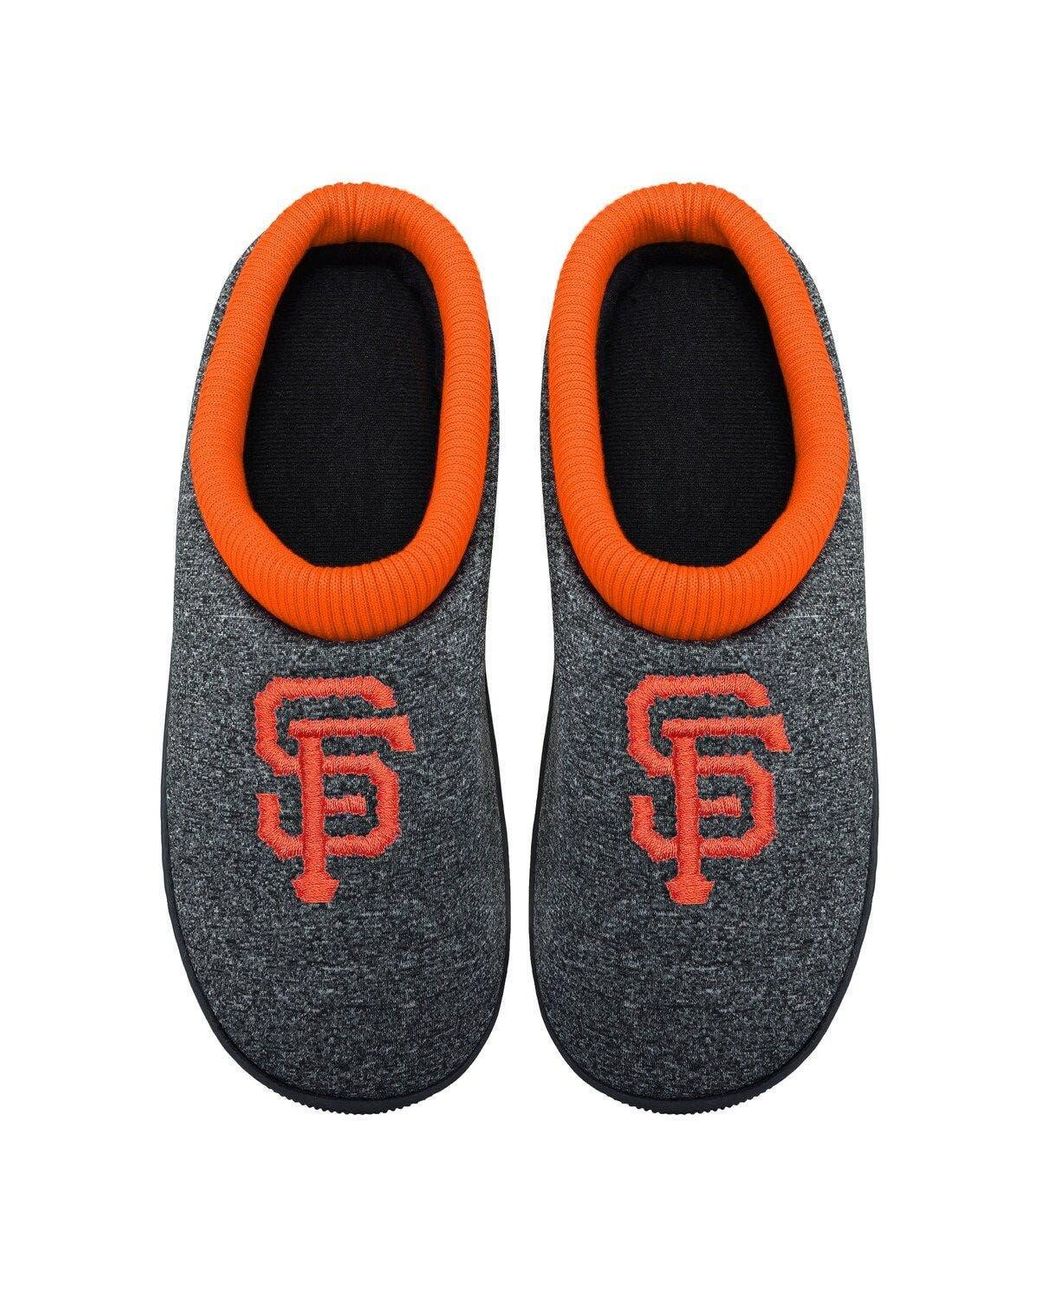 Men's FOCO St. Louis Cardinals Scuff Slide Slippers Size: Medium